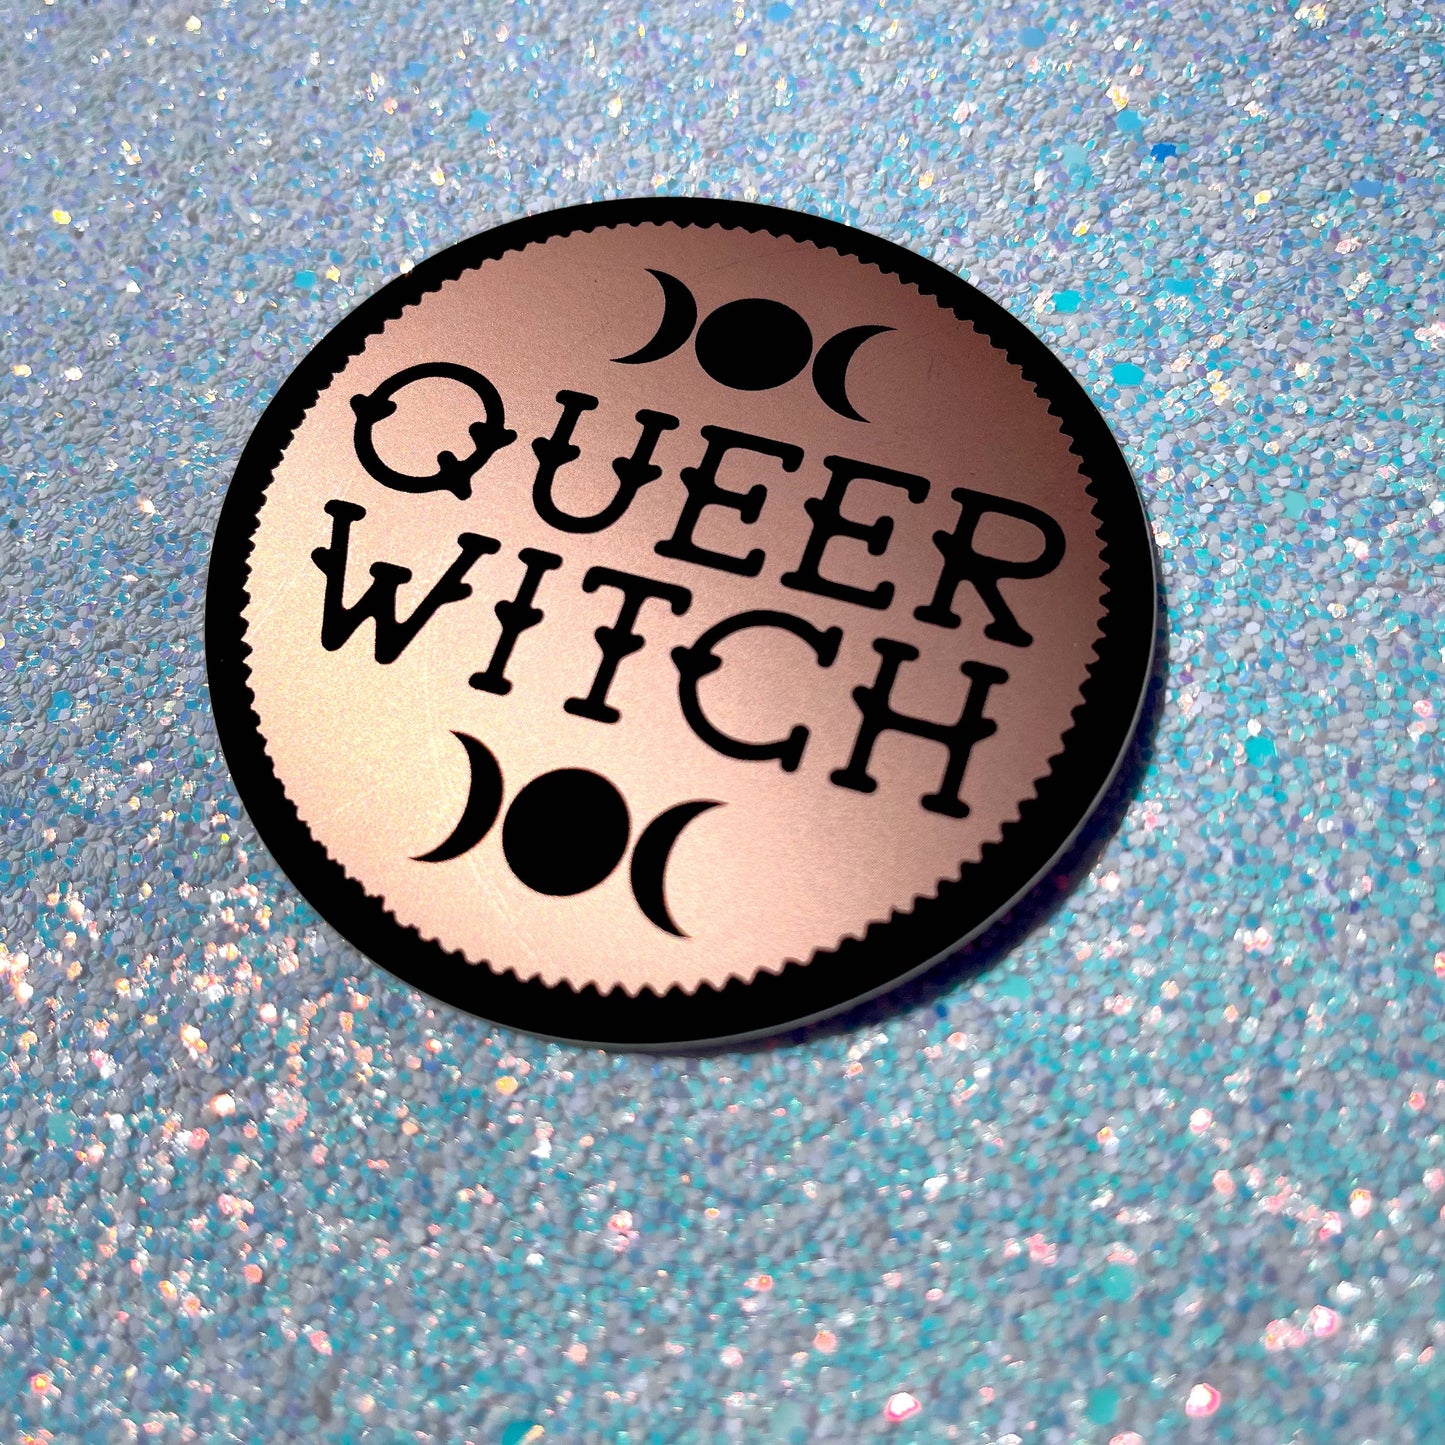 Queer Witch Sticker